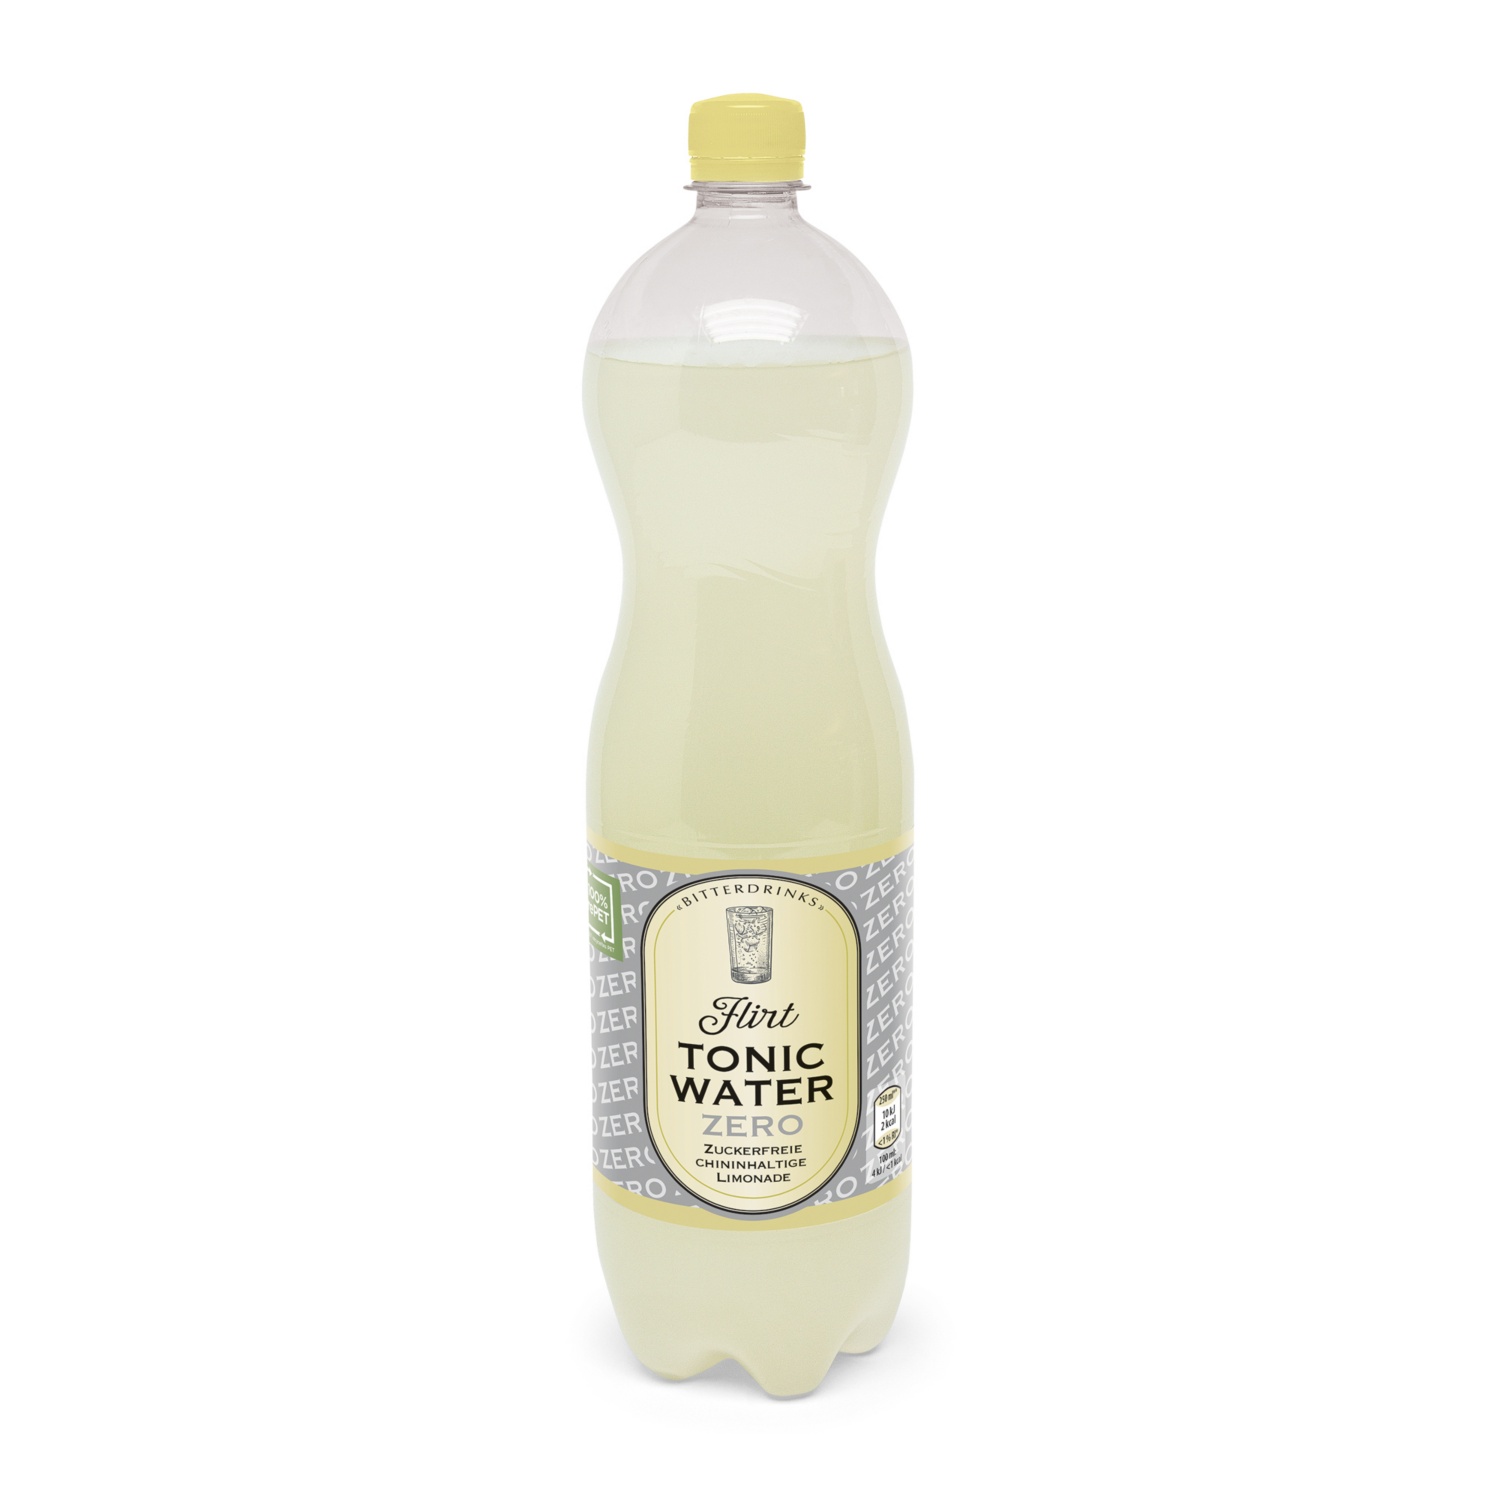 FLIRT grenka limonada zero, Tonic Water Zero